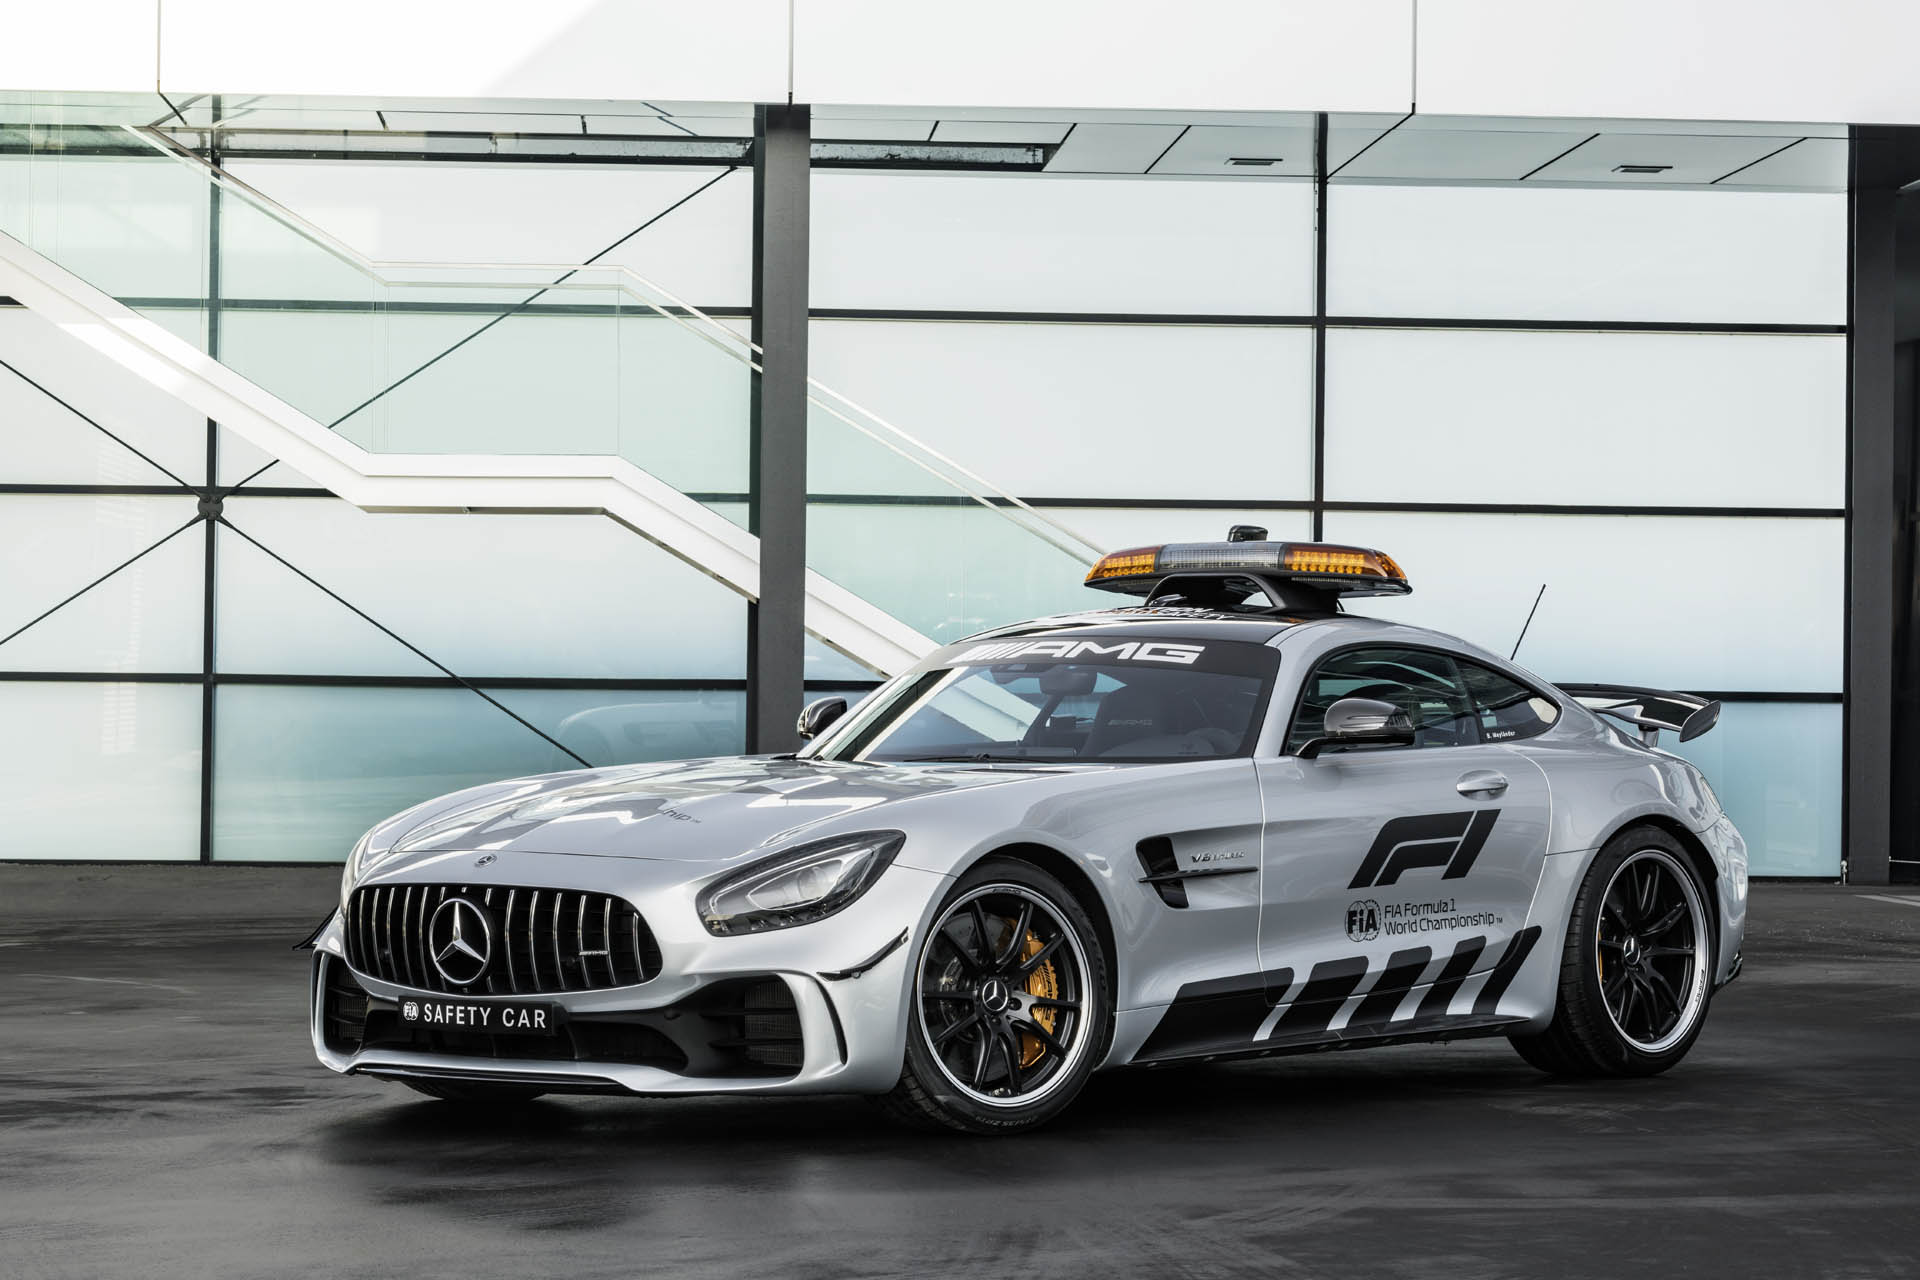 Mercedes AMG GT R Resmi Jadi Safety Car F1 Yang Paling Powerful